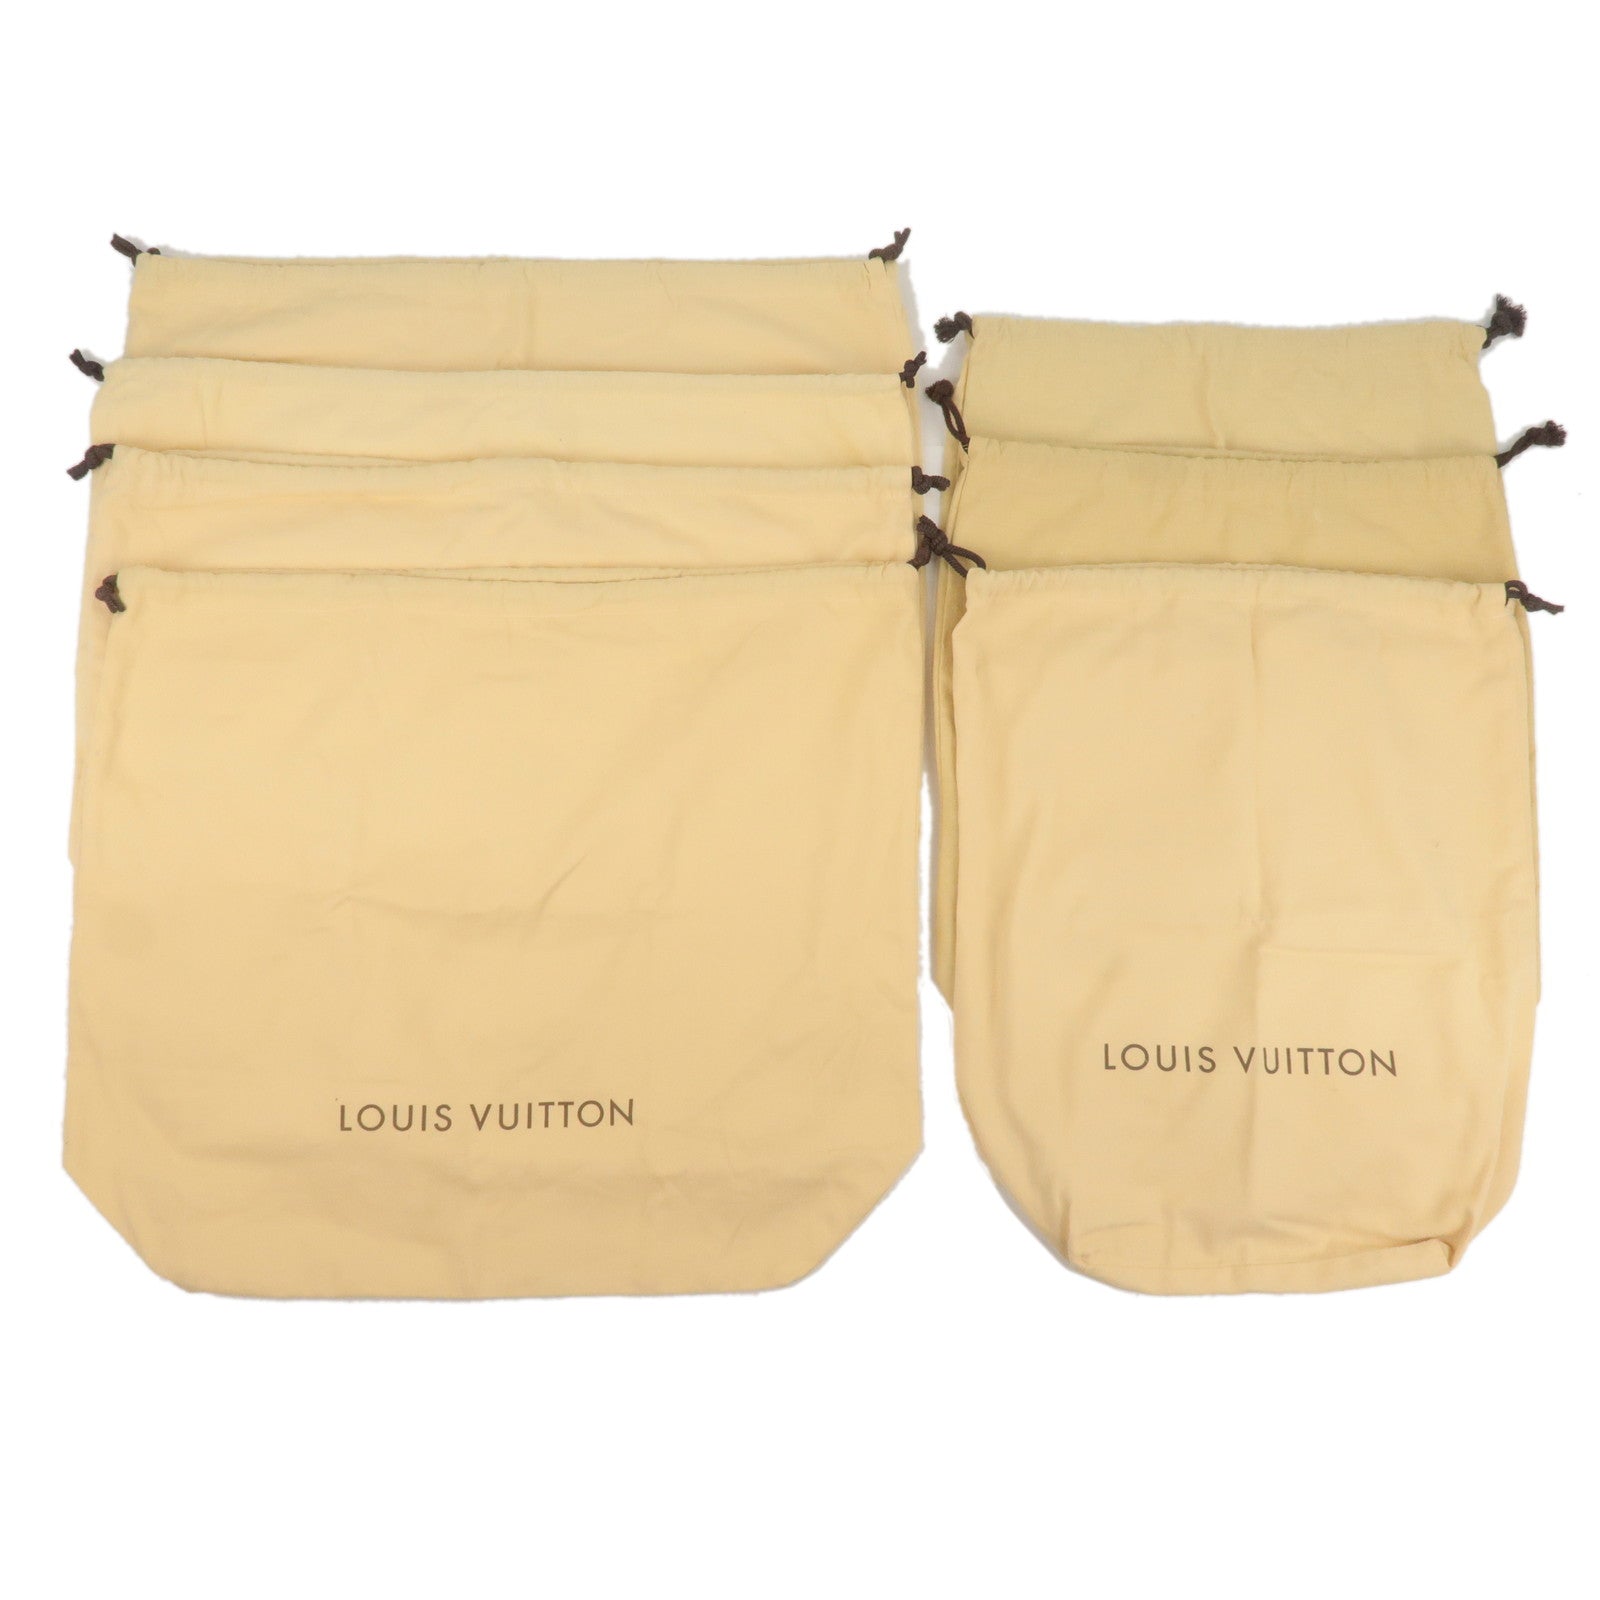 Louis Vuitton X-Large Dust-bag 23 x 18 x 5 Drawstring Italy Authentic